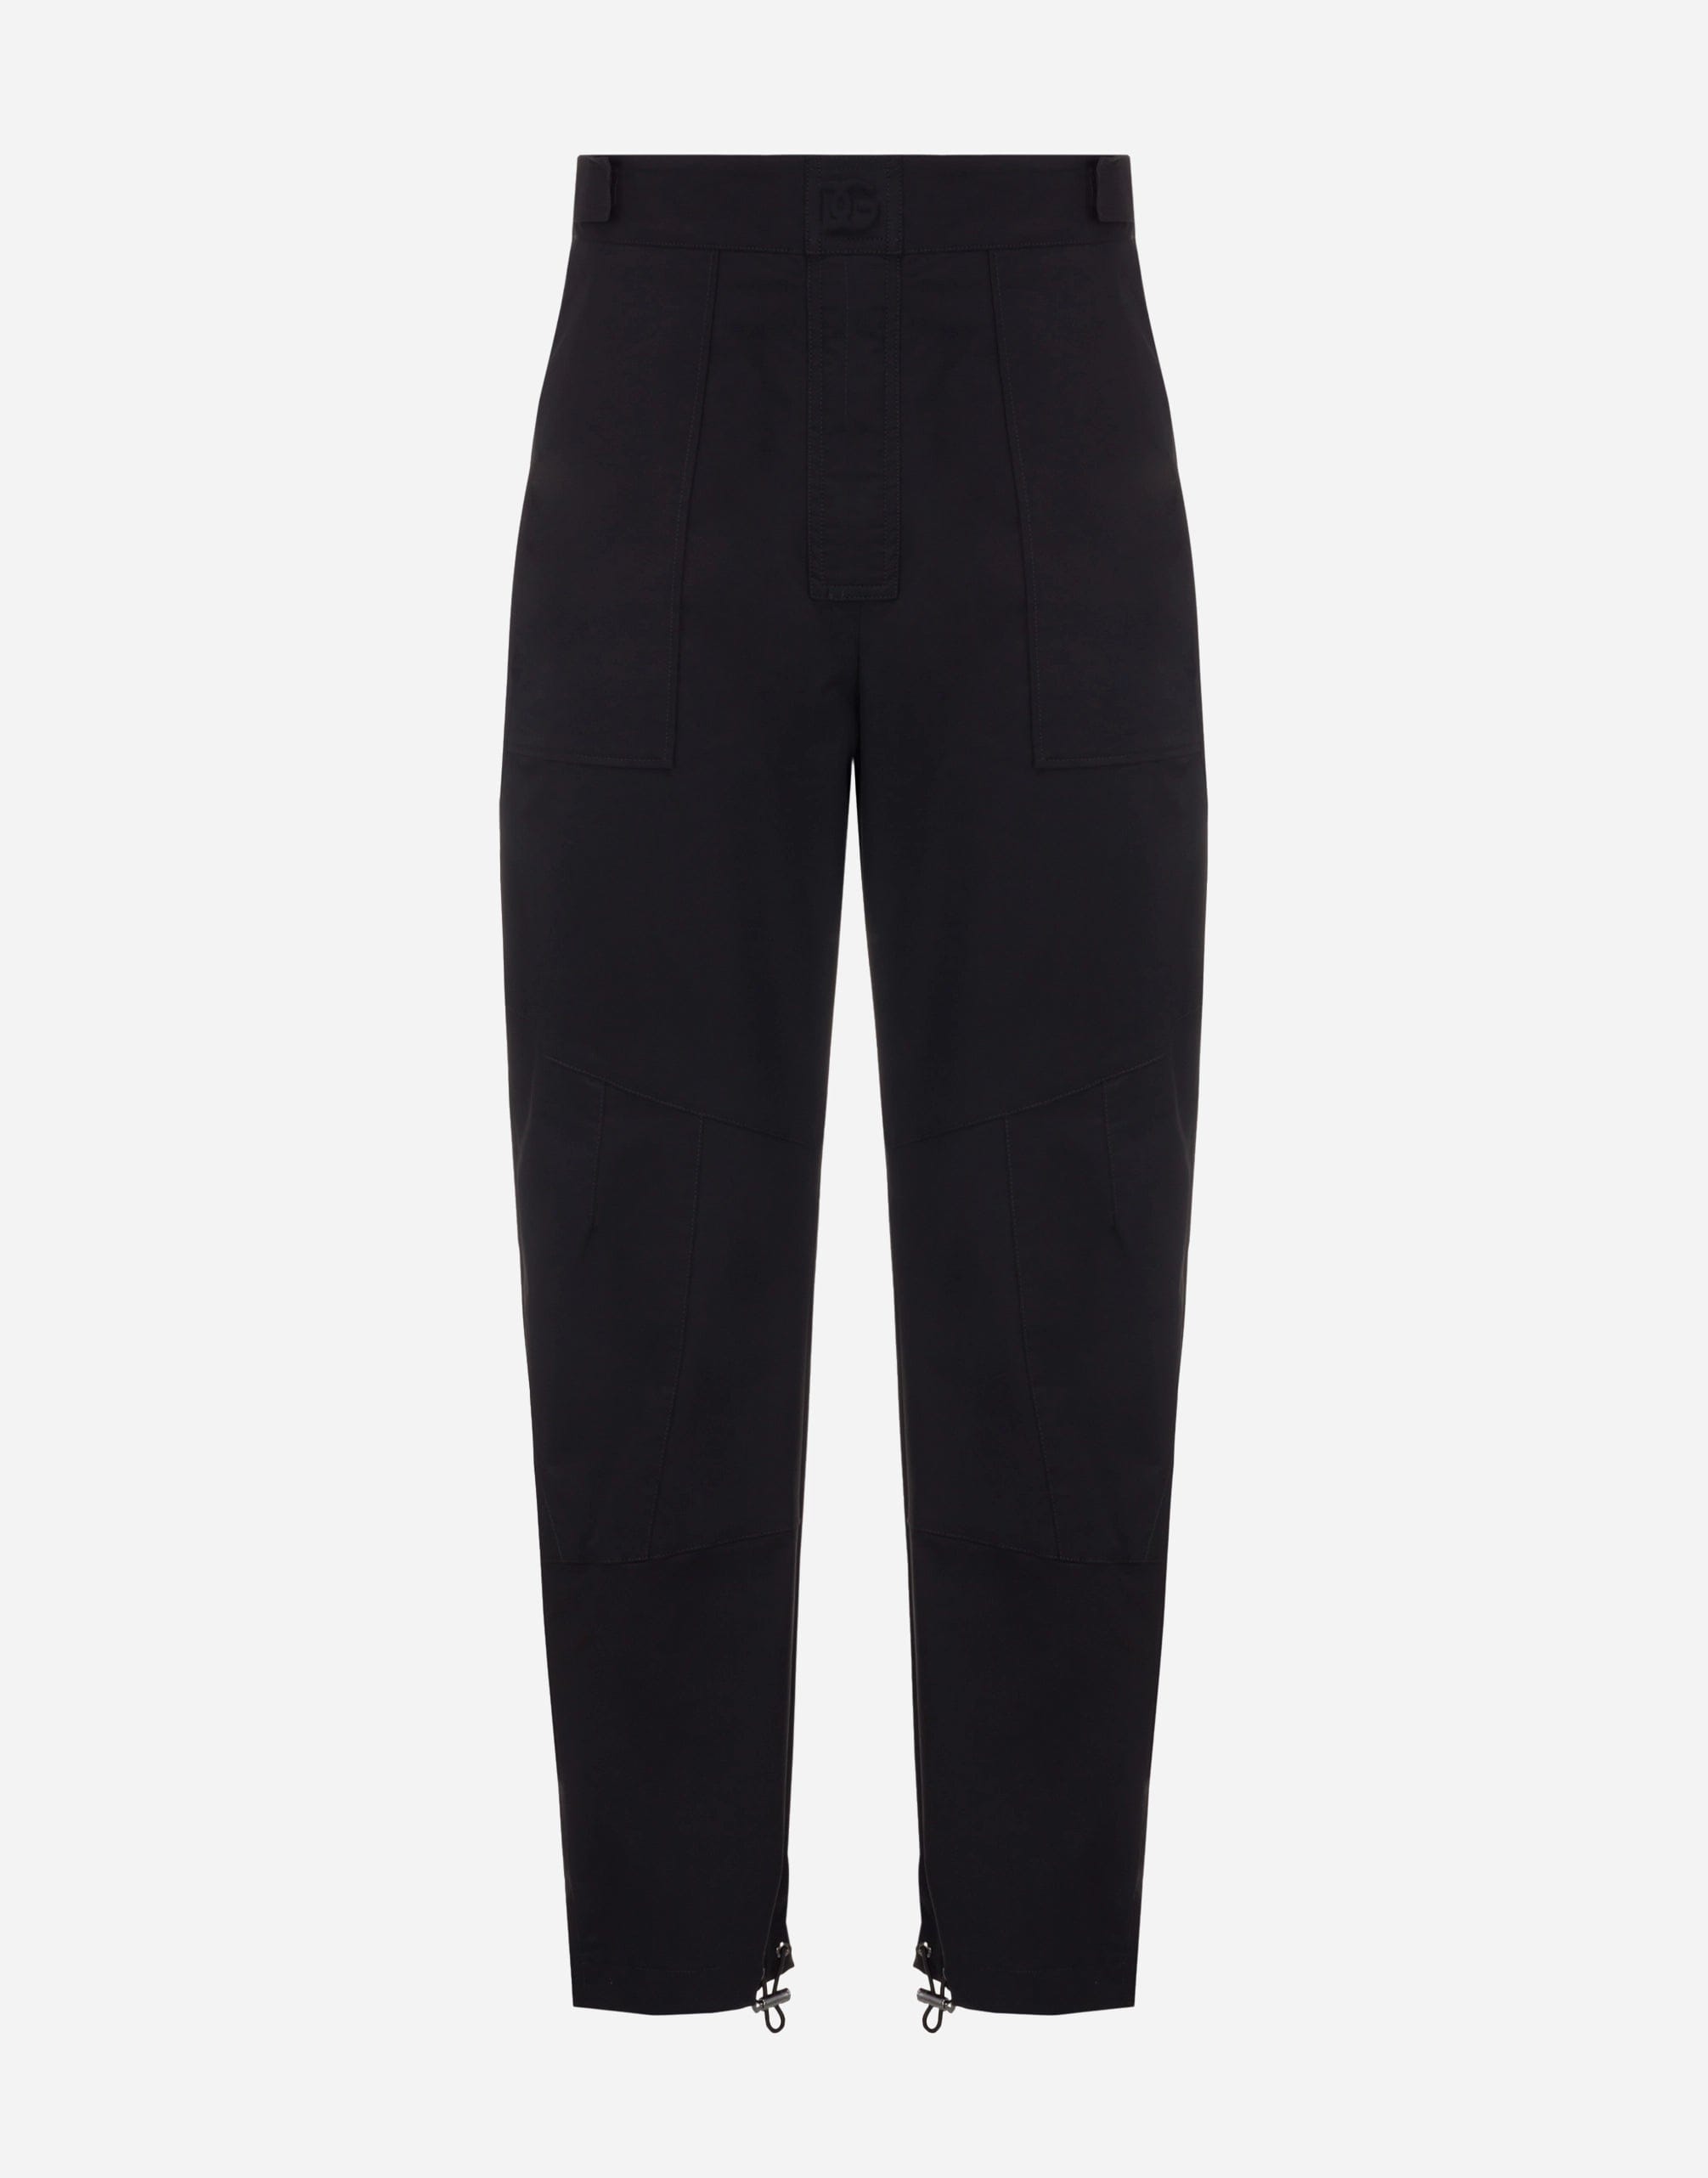 Dolce & Gabbana Technical Fabric Pants